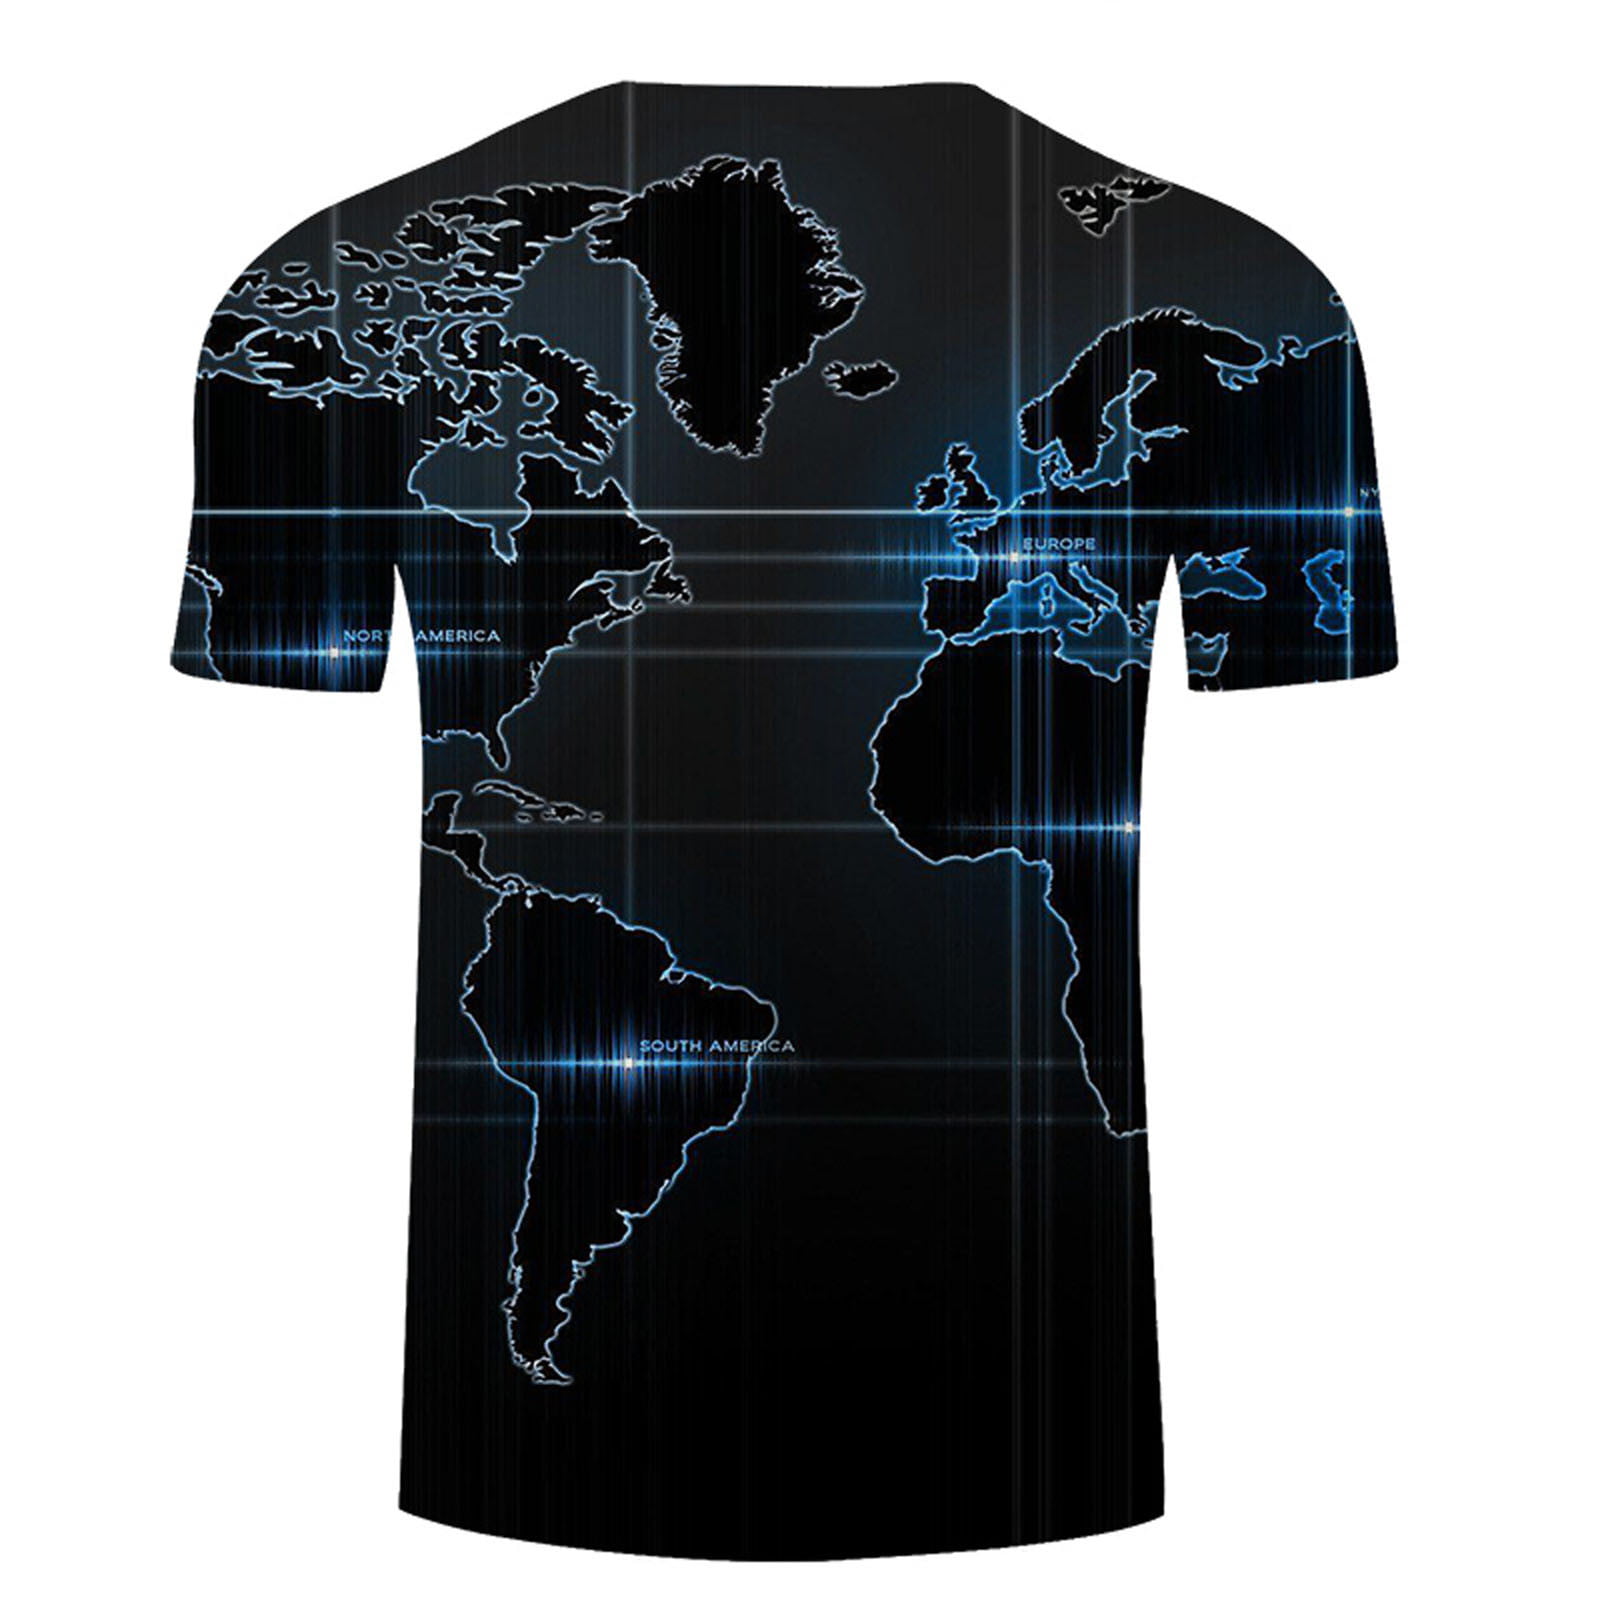 VSSSJ Fashion Shirt for Men Oversized Fit 3D World Map Print Short Sleeve  Crewneck T-Shirt Comfortable Summer Stylish Lounging Blouse Top Black XXL